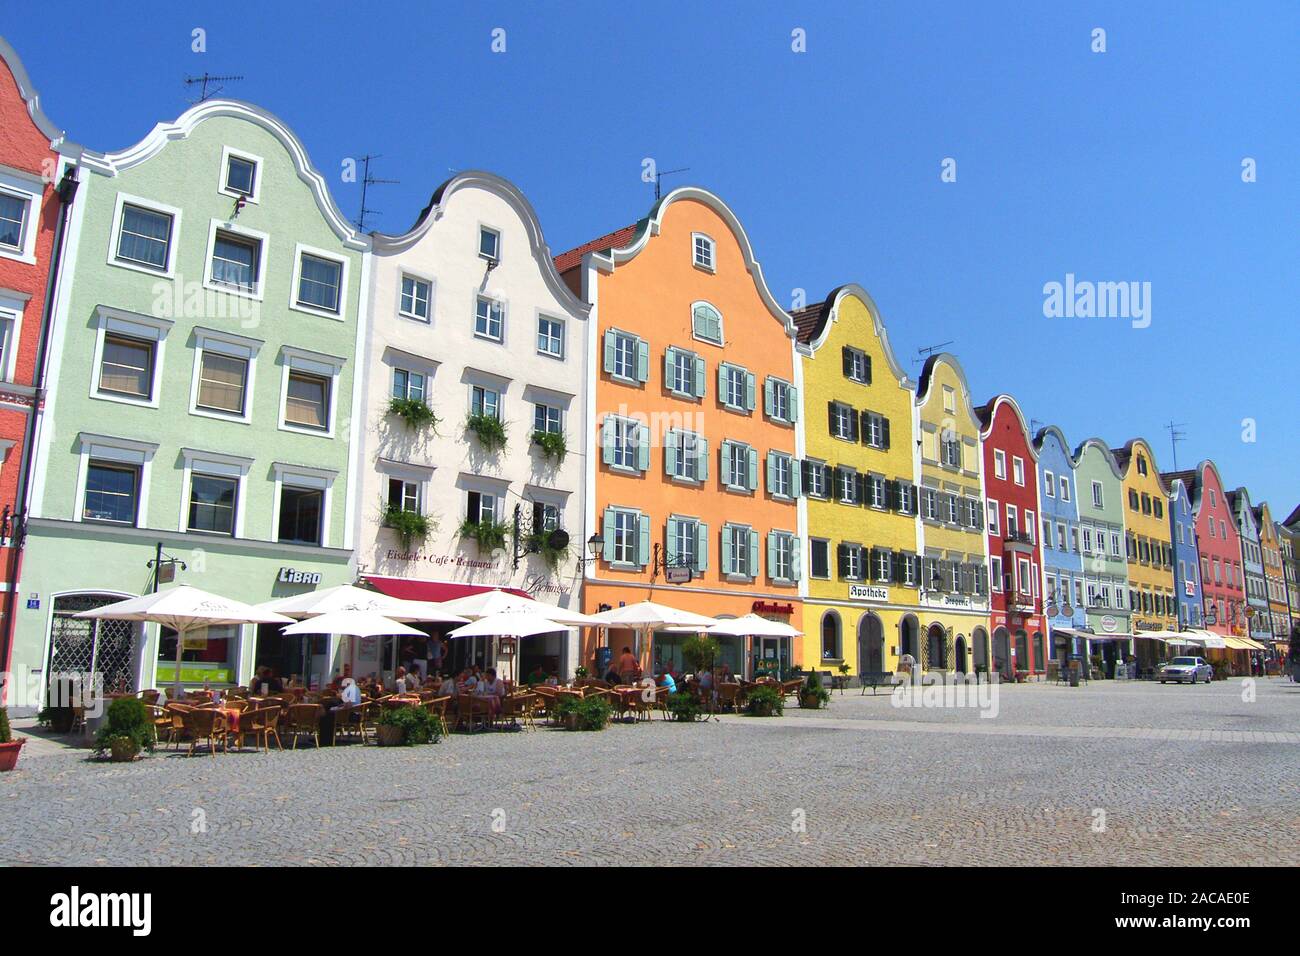 Austria, Upper Austria, Schaerding - Austria, Upper Austria, Schaerding Stock Photo